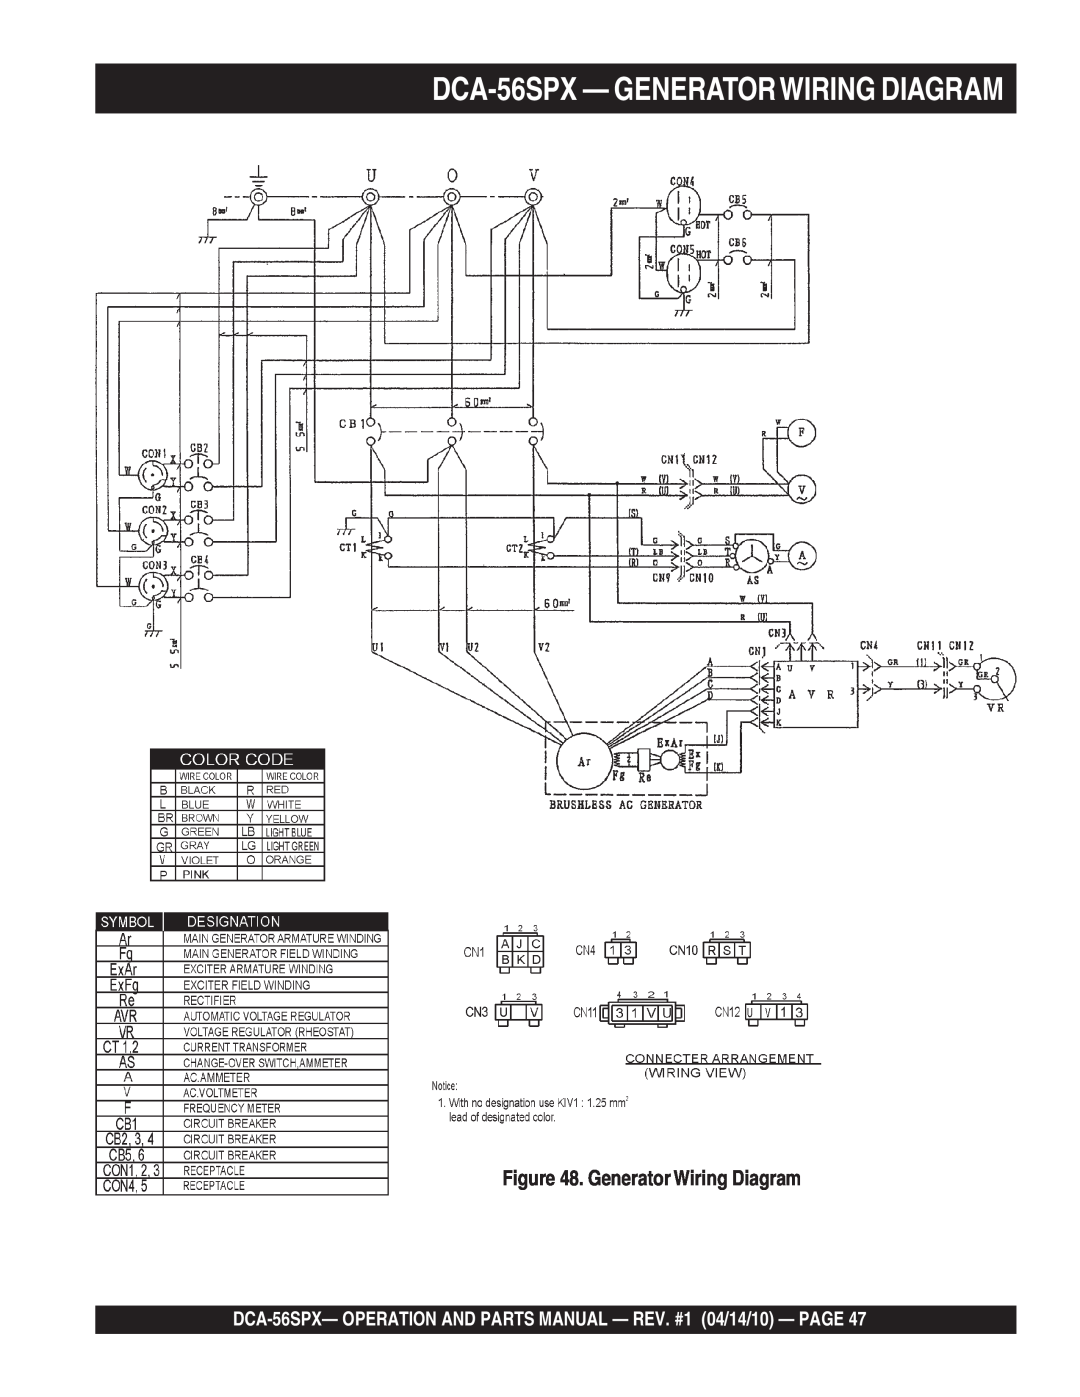 Multiquip operation manual DCA-56SPX- GENERATORWIRING DIAGRAM, Generator Wiring Diagram 